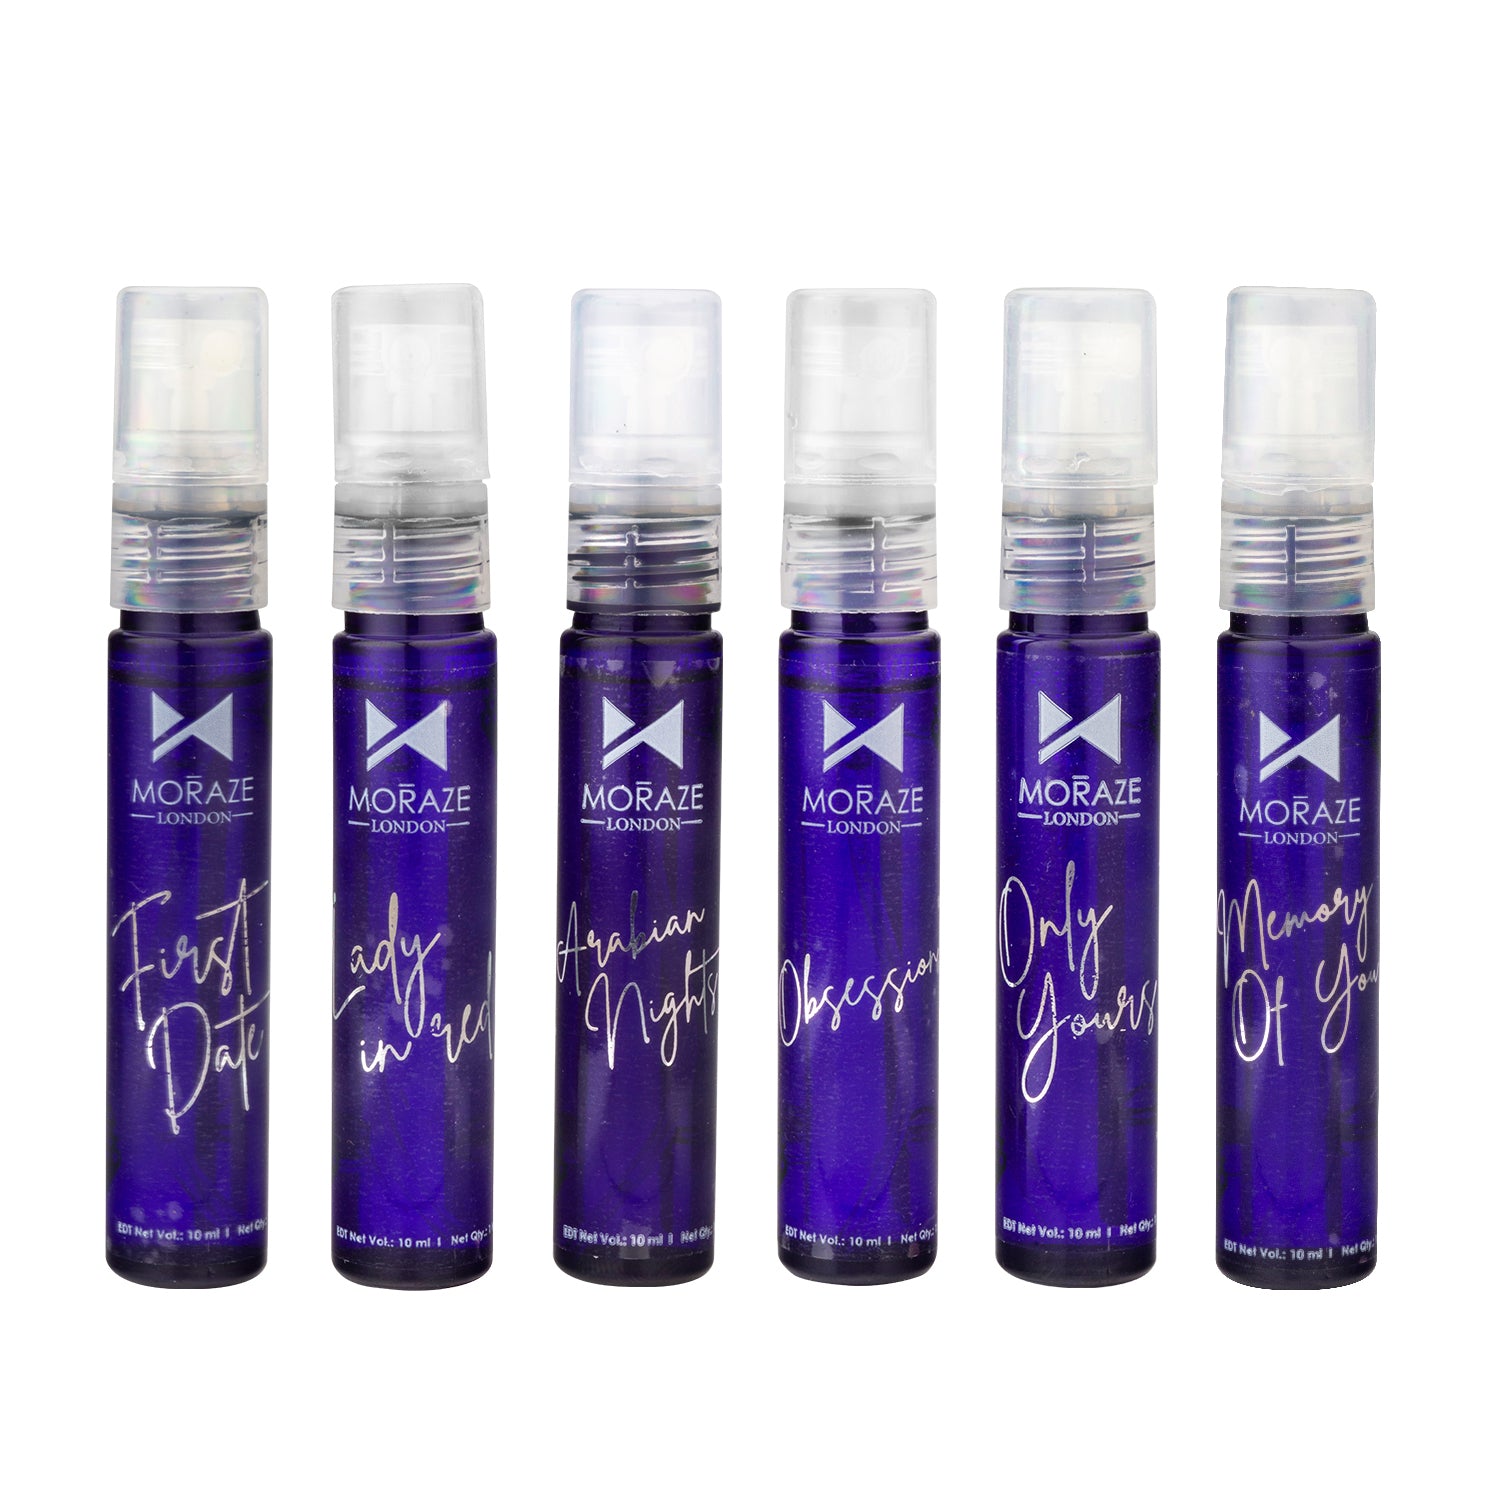 Moraze Pack of 6 Perfume Set